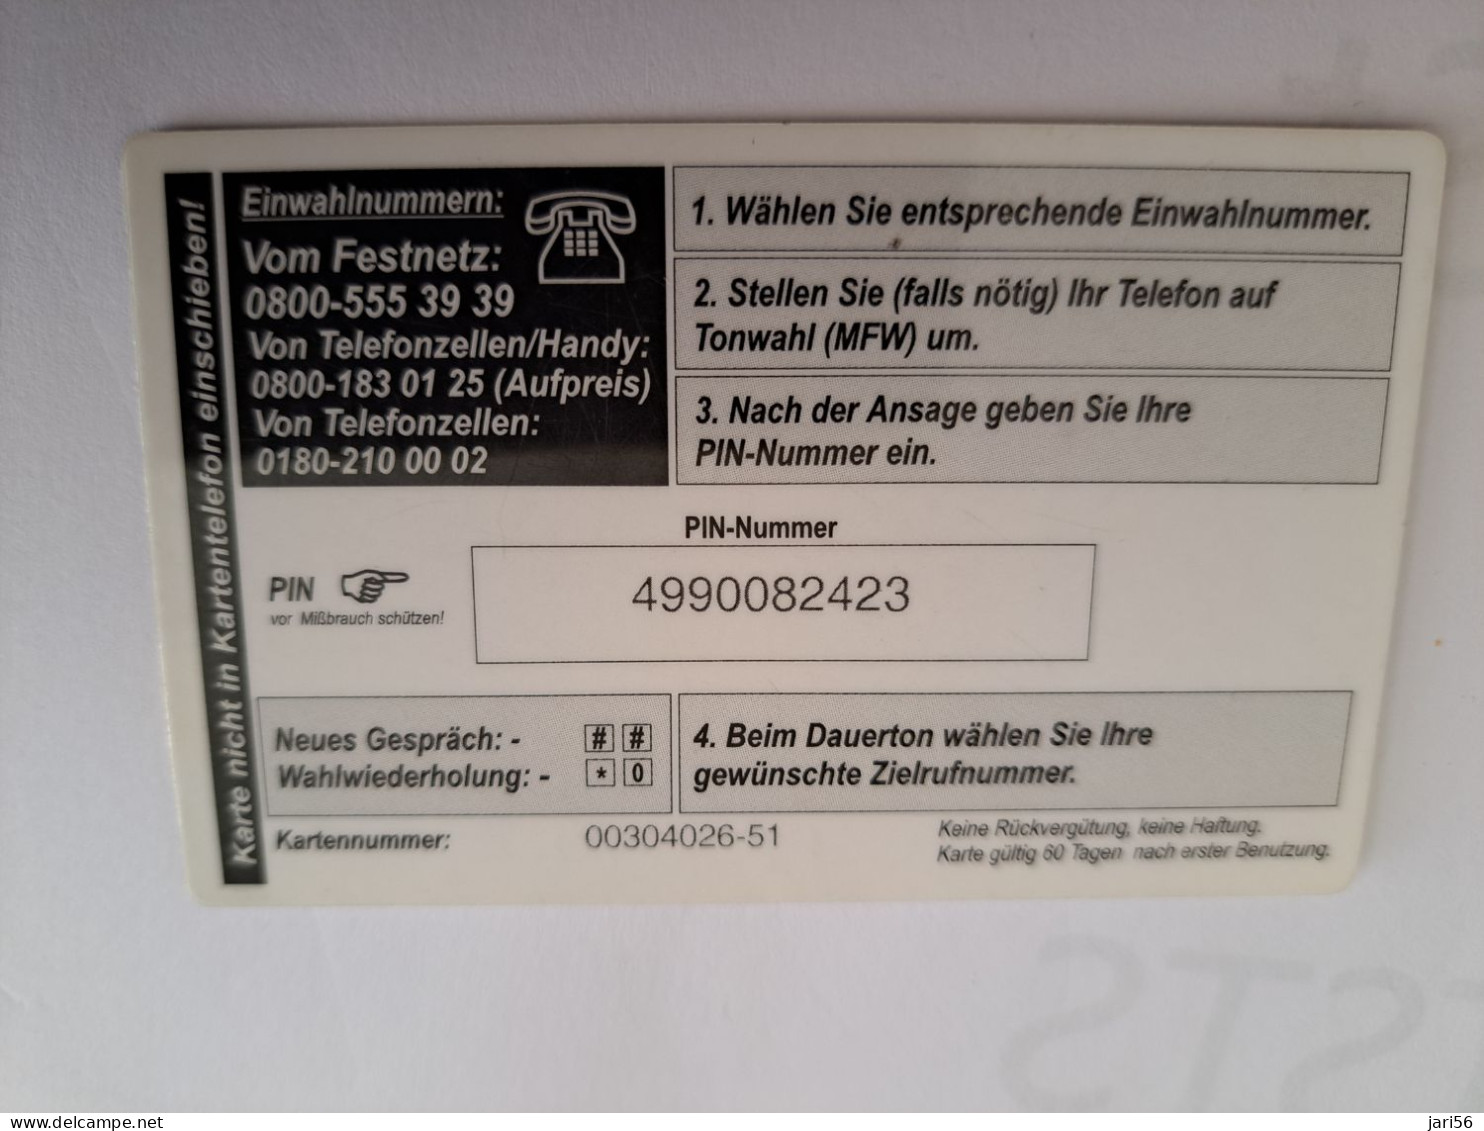 DUITSLAND/GERMANY  € 5,- / TELE MONEY/ BANKNOTES & COINS ON CARD        Fine Used  PREPAID  **16528** - Cellulari, Carte Prepagate E Ricariche